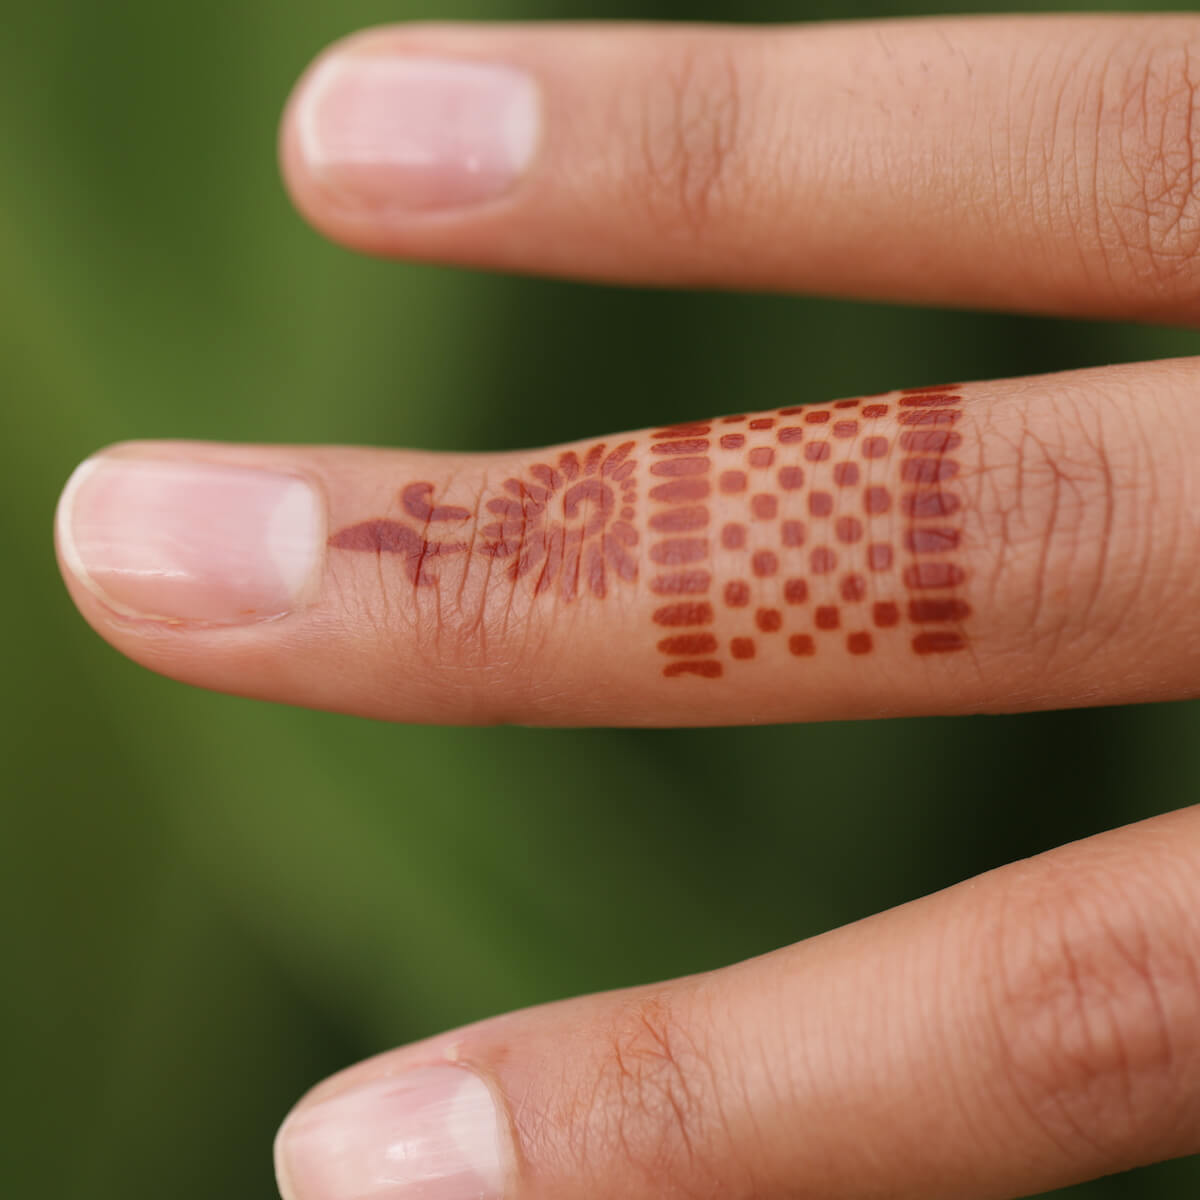 Radiant - ring henna tattoo on finger